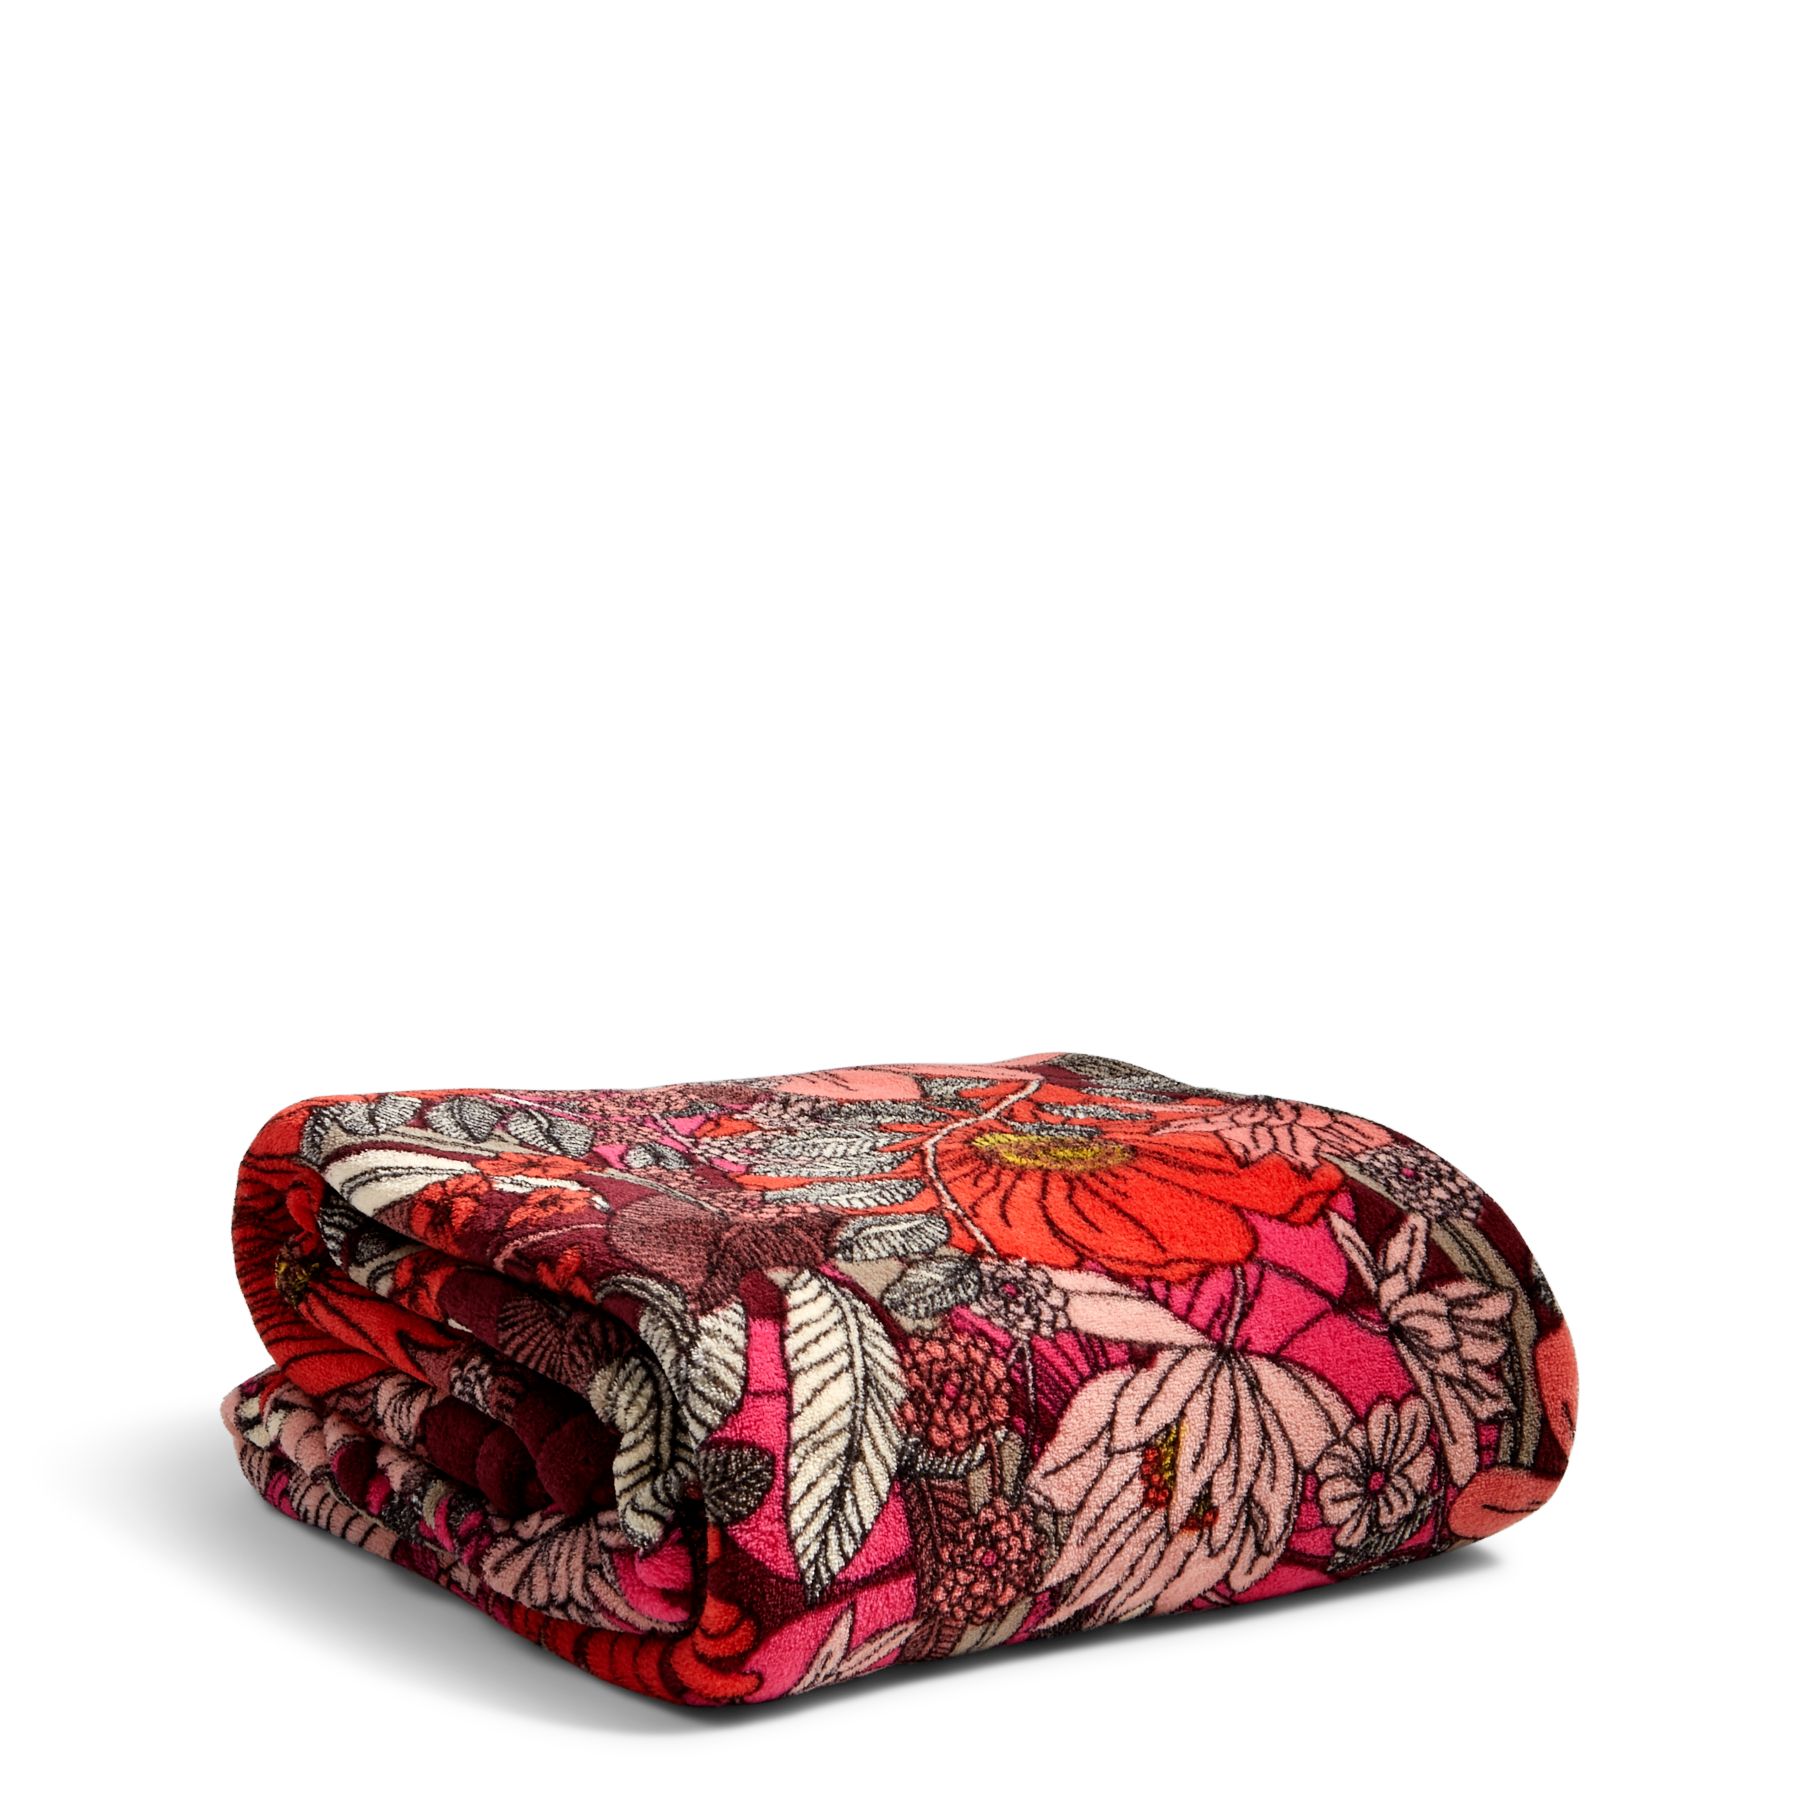 UPC 886003407011 product image for Vera Bradley Throw Blanket in Bohemian Blooms | upcitemdb.com